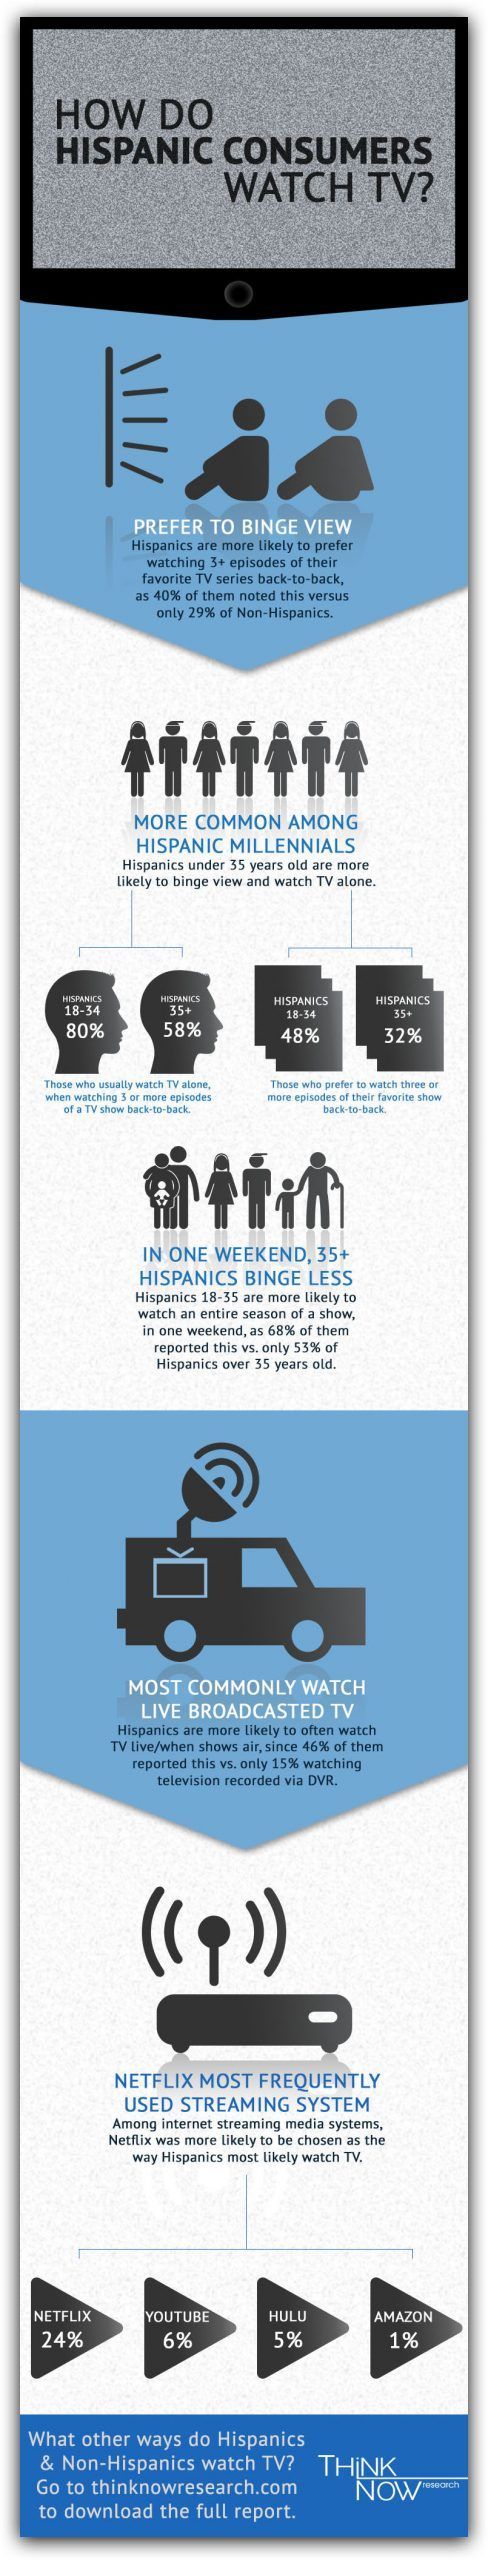 binge-viewing-infographic